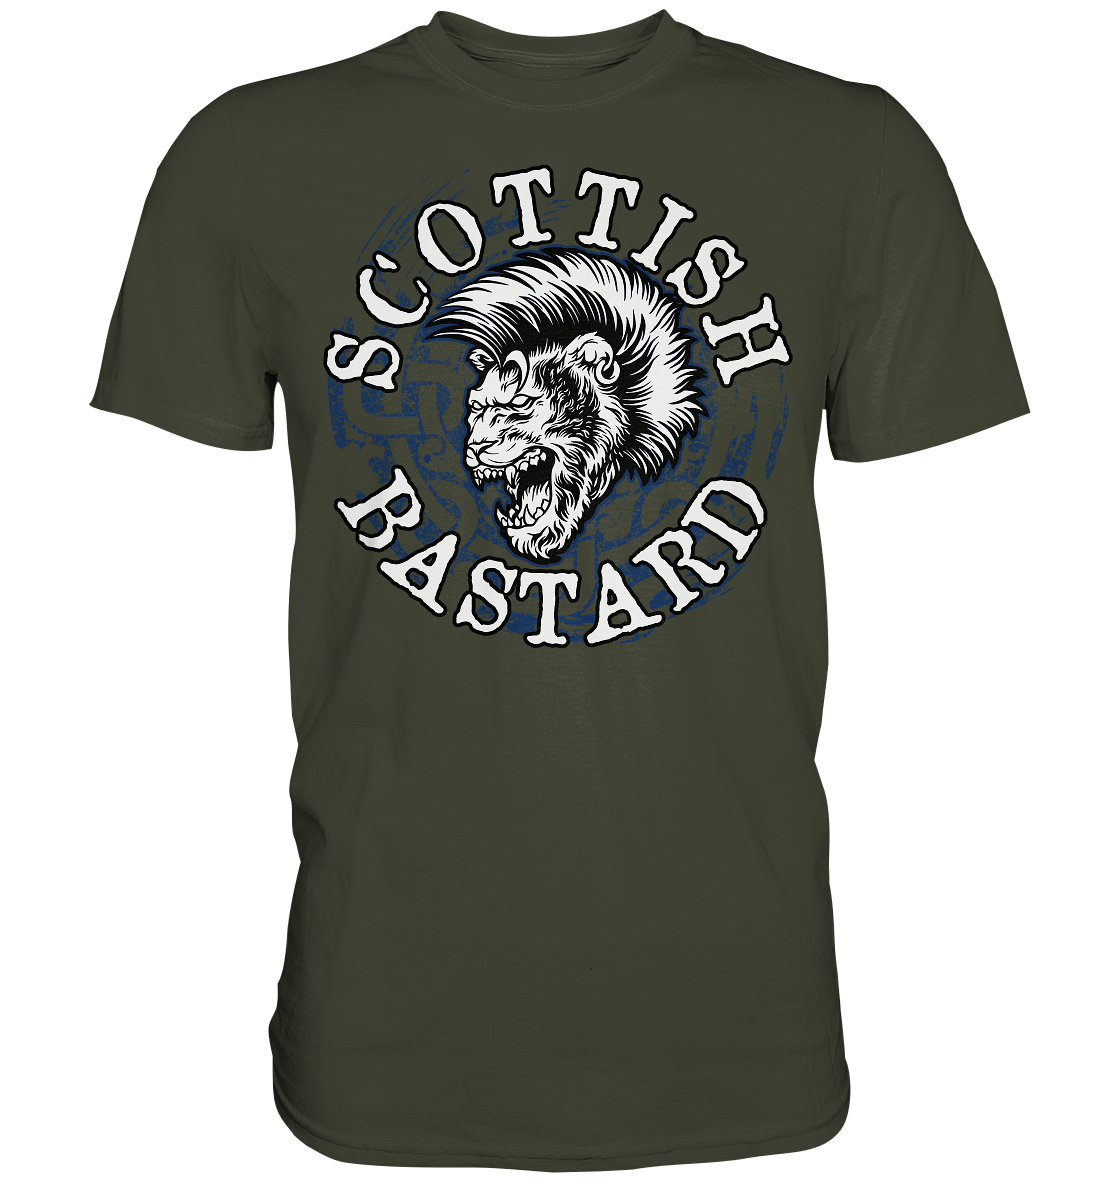 "Scottish Bastard" - Premium Shirt